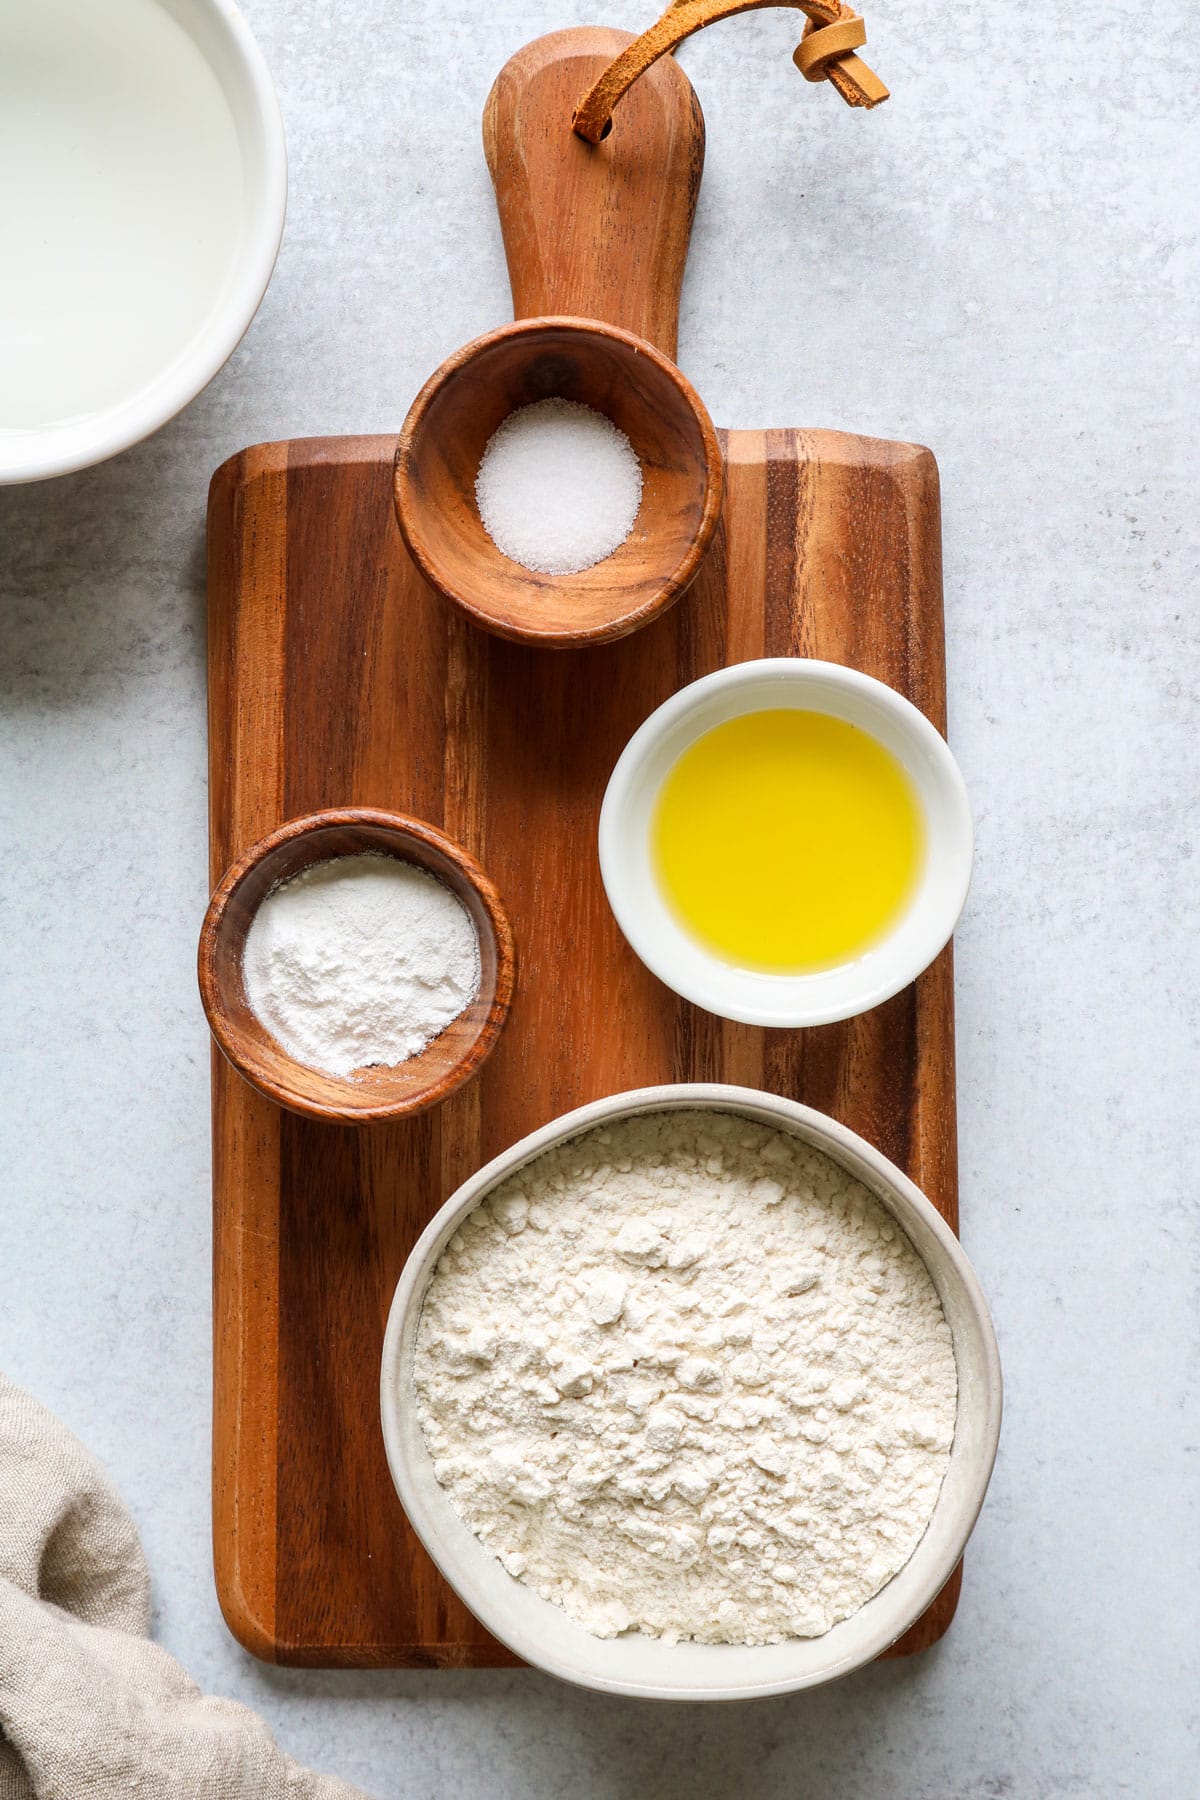 Easy Skillet Flatbread ingredients: flour, baking powder, olive oil, salt, and non-dairy milk (or water).